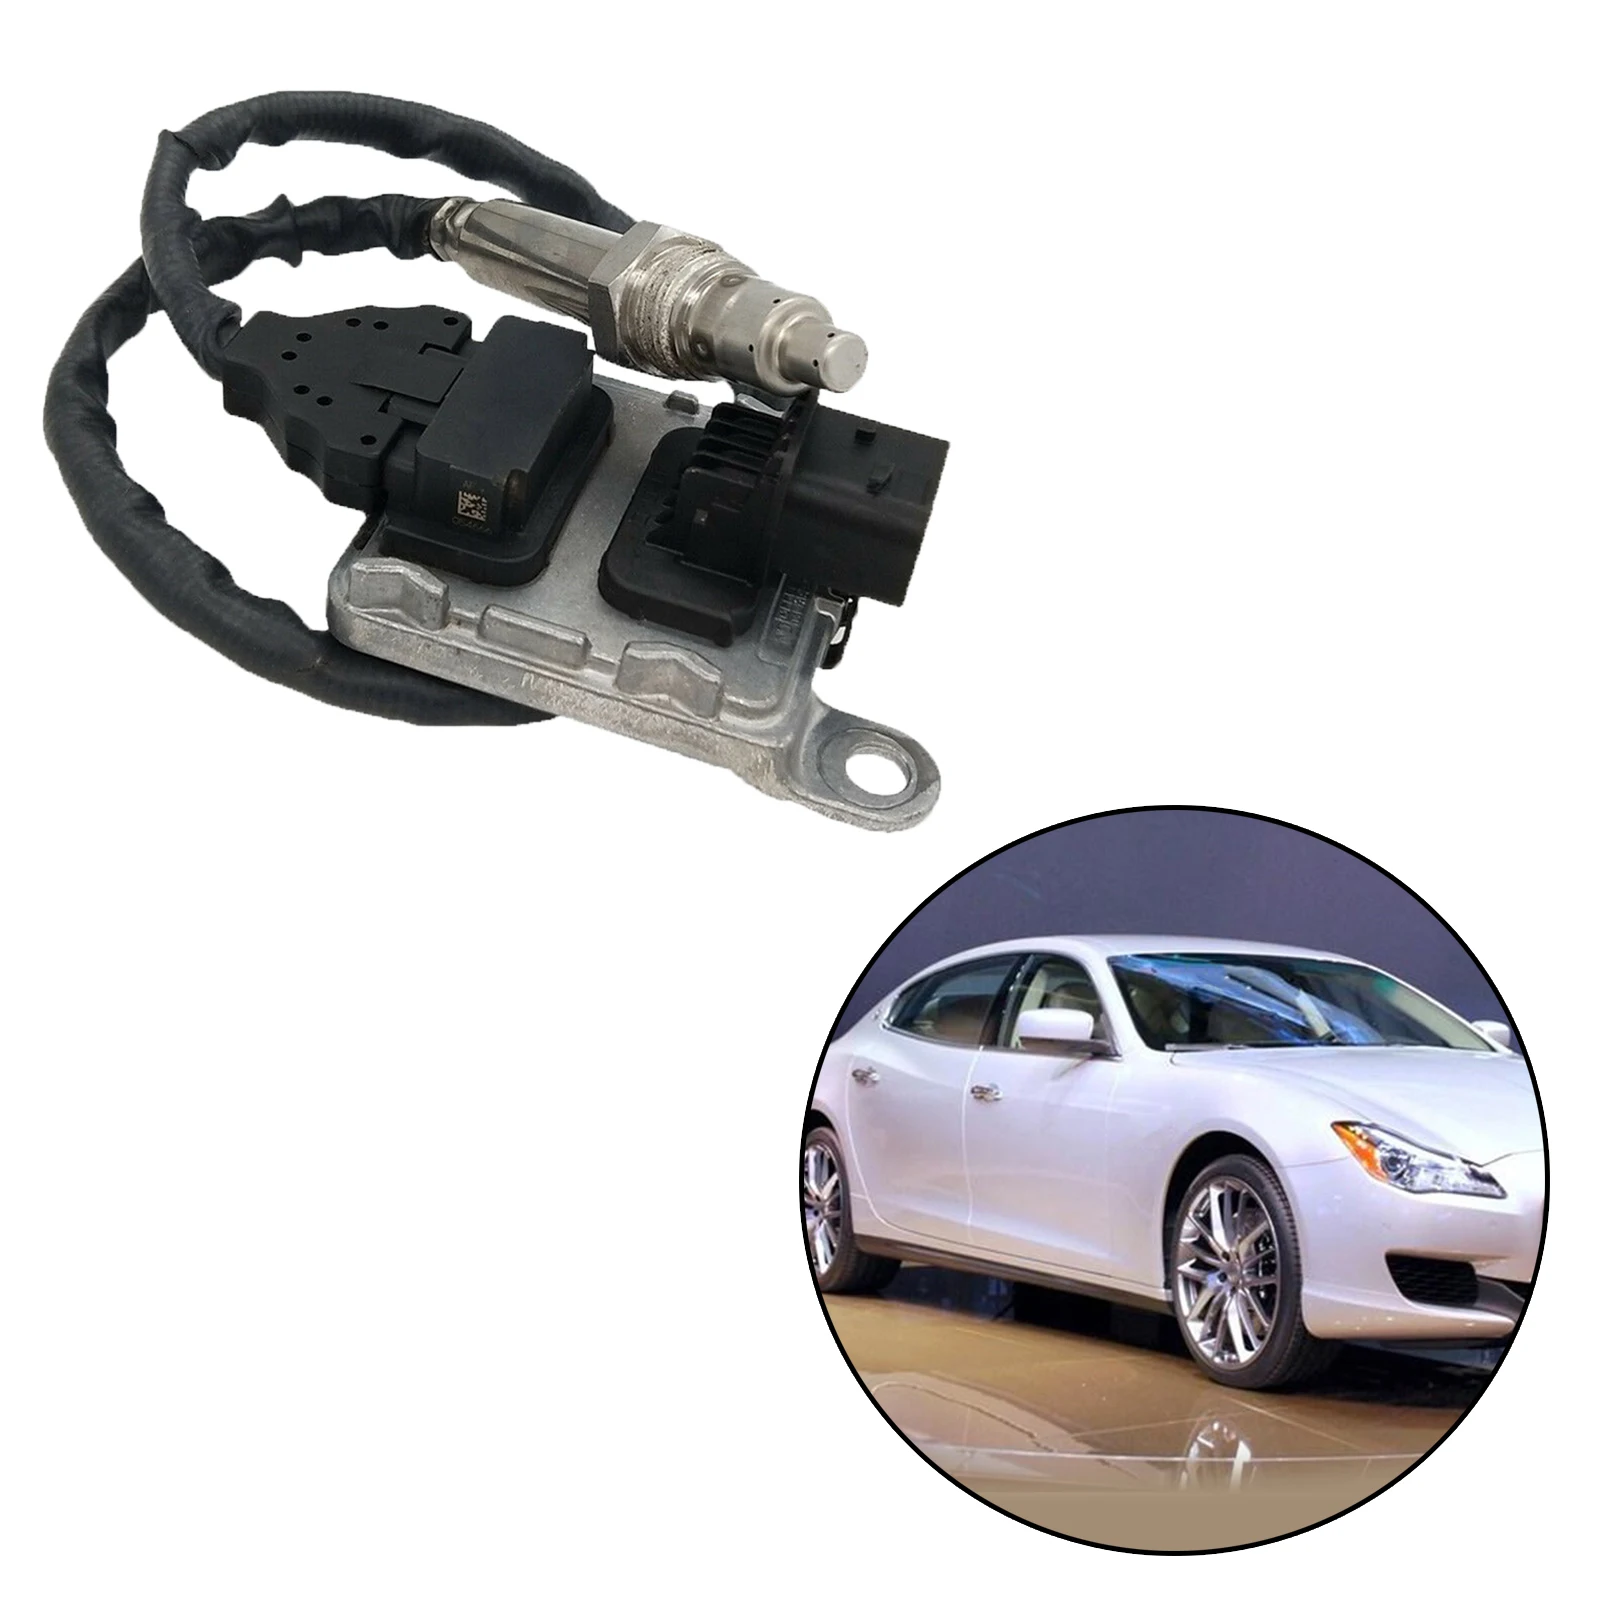 A0101531928 Nitrogen Oxide Sensor Nox Sensor for Mercedes Detroit Engine Inlet DD13 DD16 Car Accessories